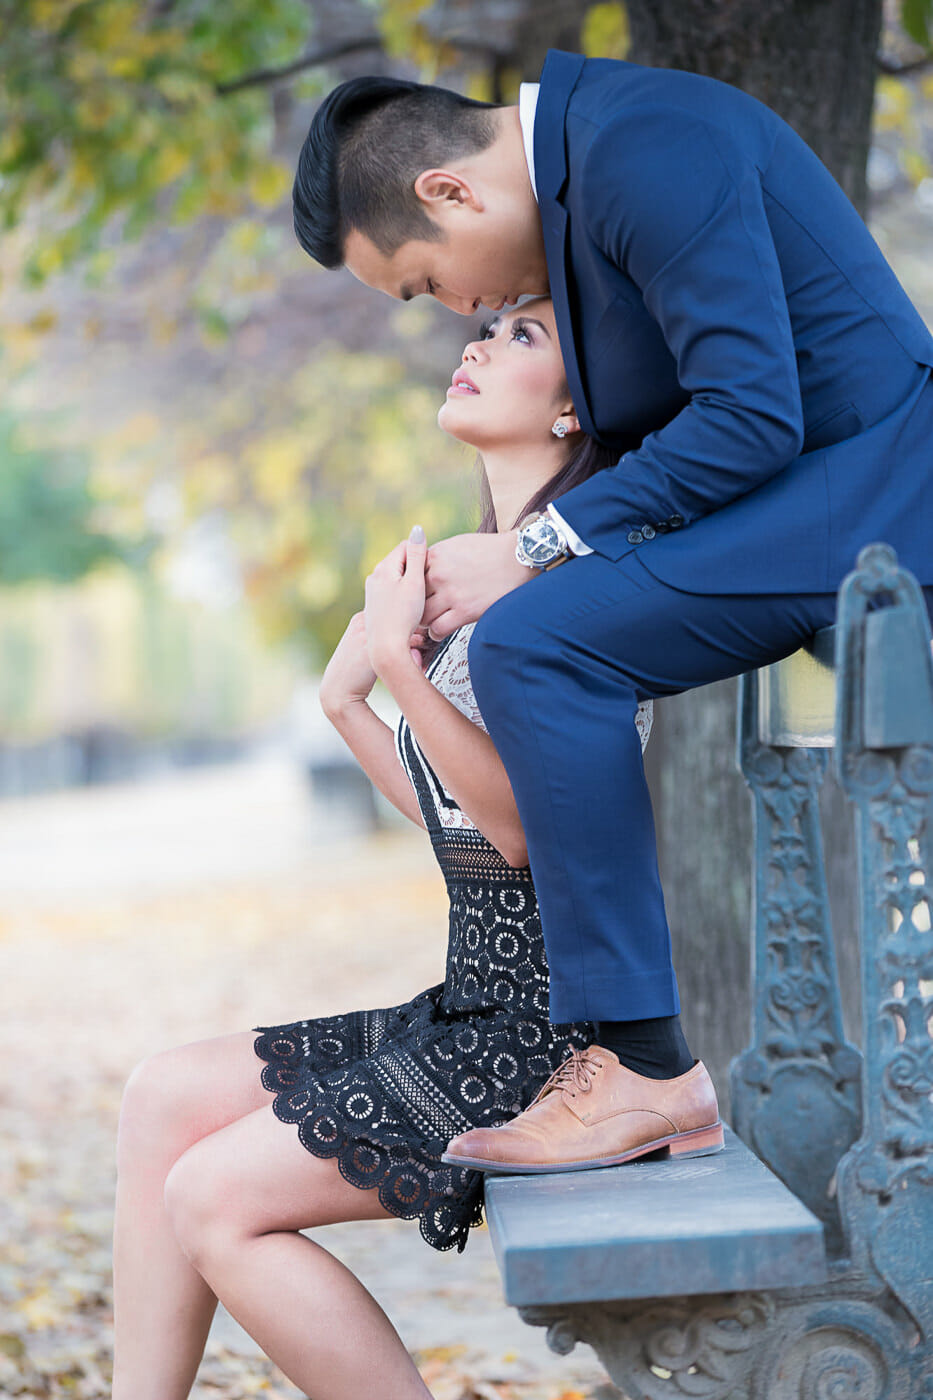 Perfect poses for couples doing Paris engagement photos